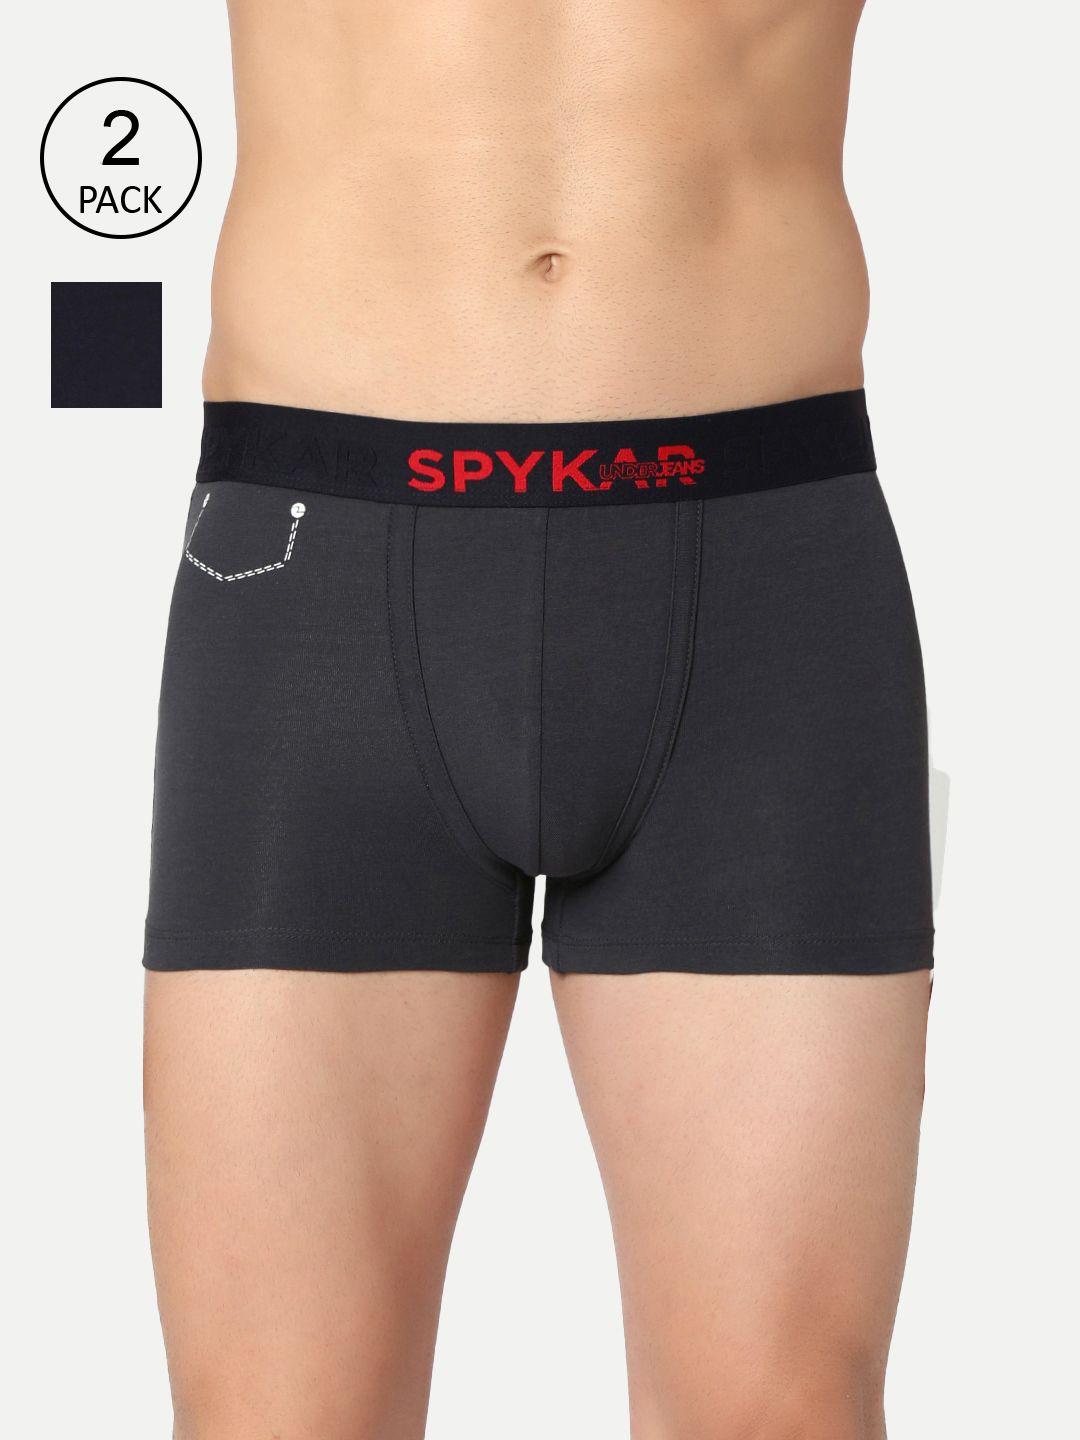 underjeans-by-spykar-men-pack-of-2-solid-trunks